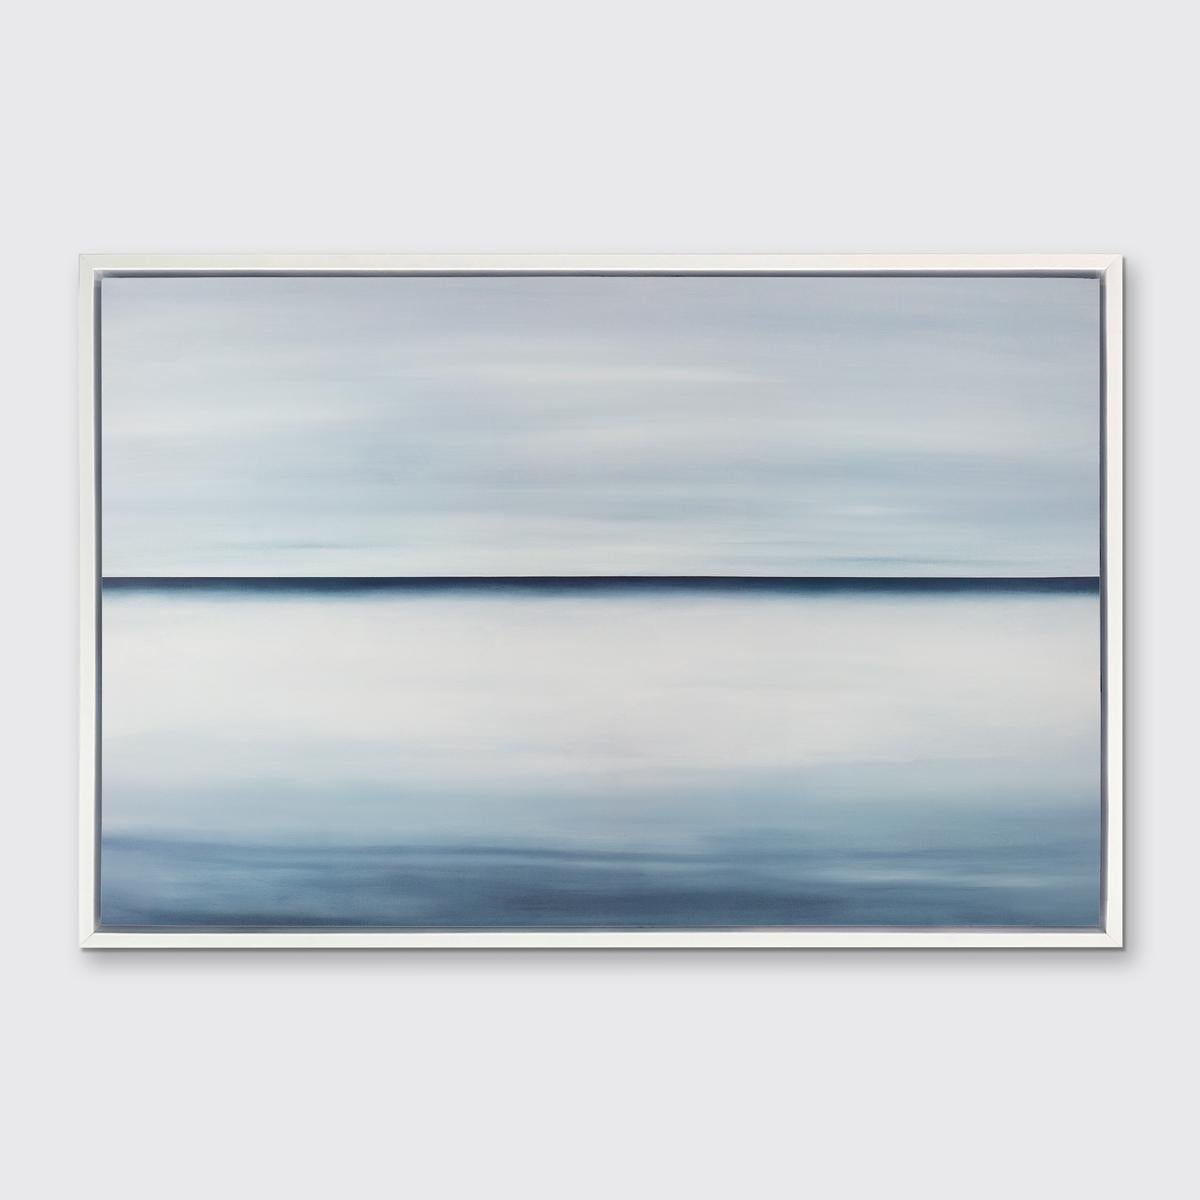 Abstract Print Tony Iadicicco - "Open Water" Giclée encadrée à édition limitée, 48" x 72".